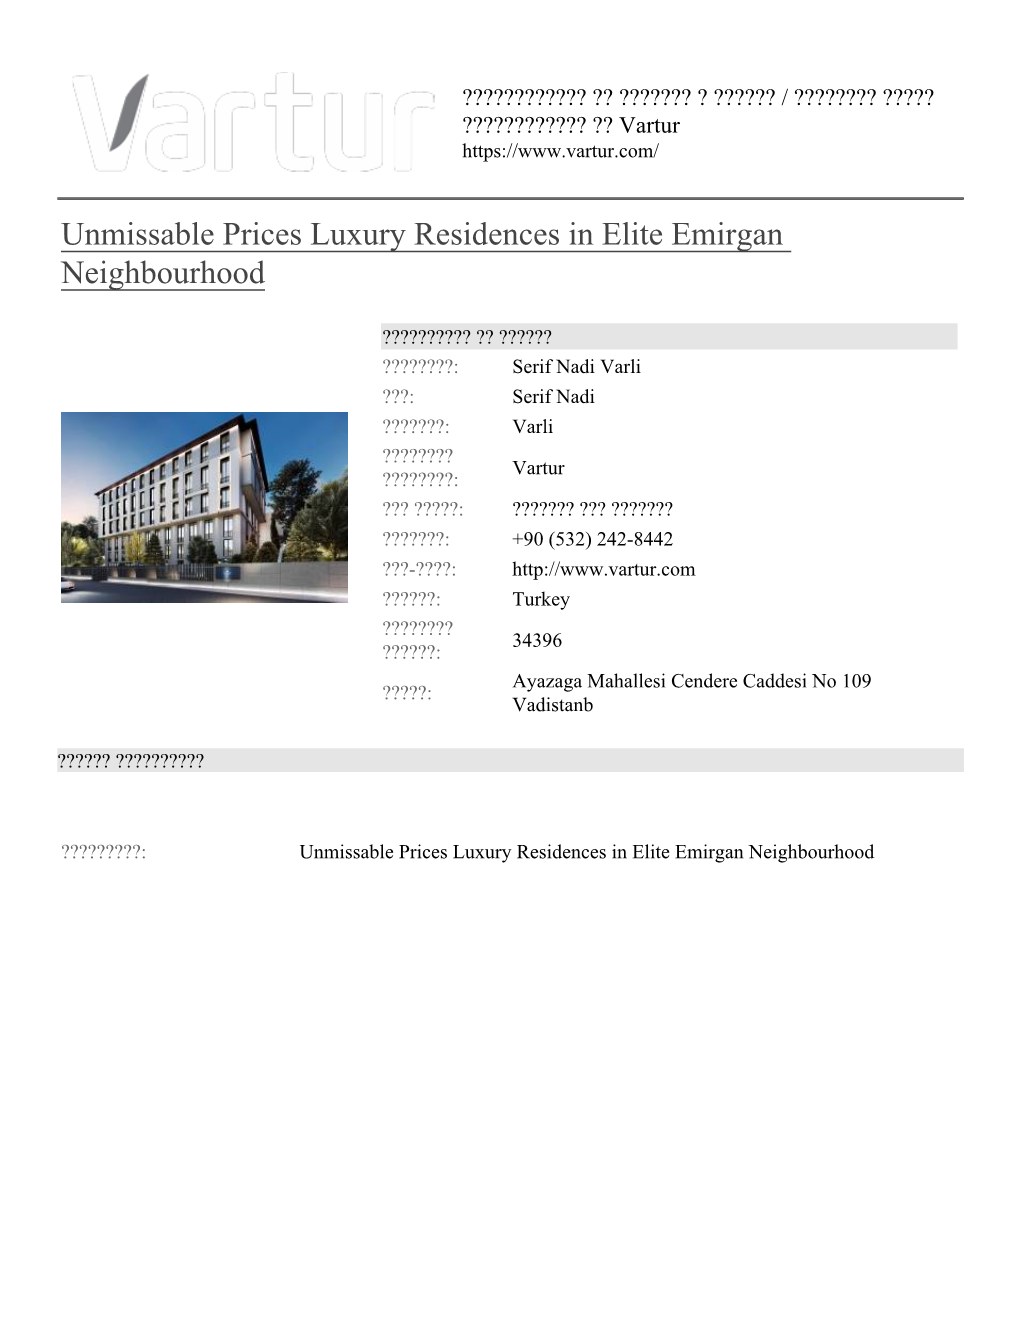 Unmissable Prices Luxury Residences in Elite Emirgan Neighbourhood